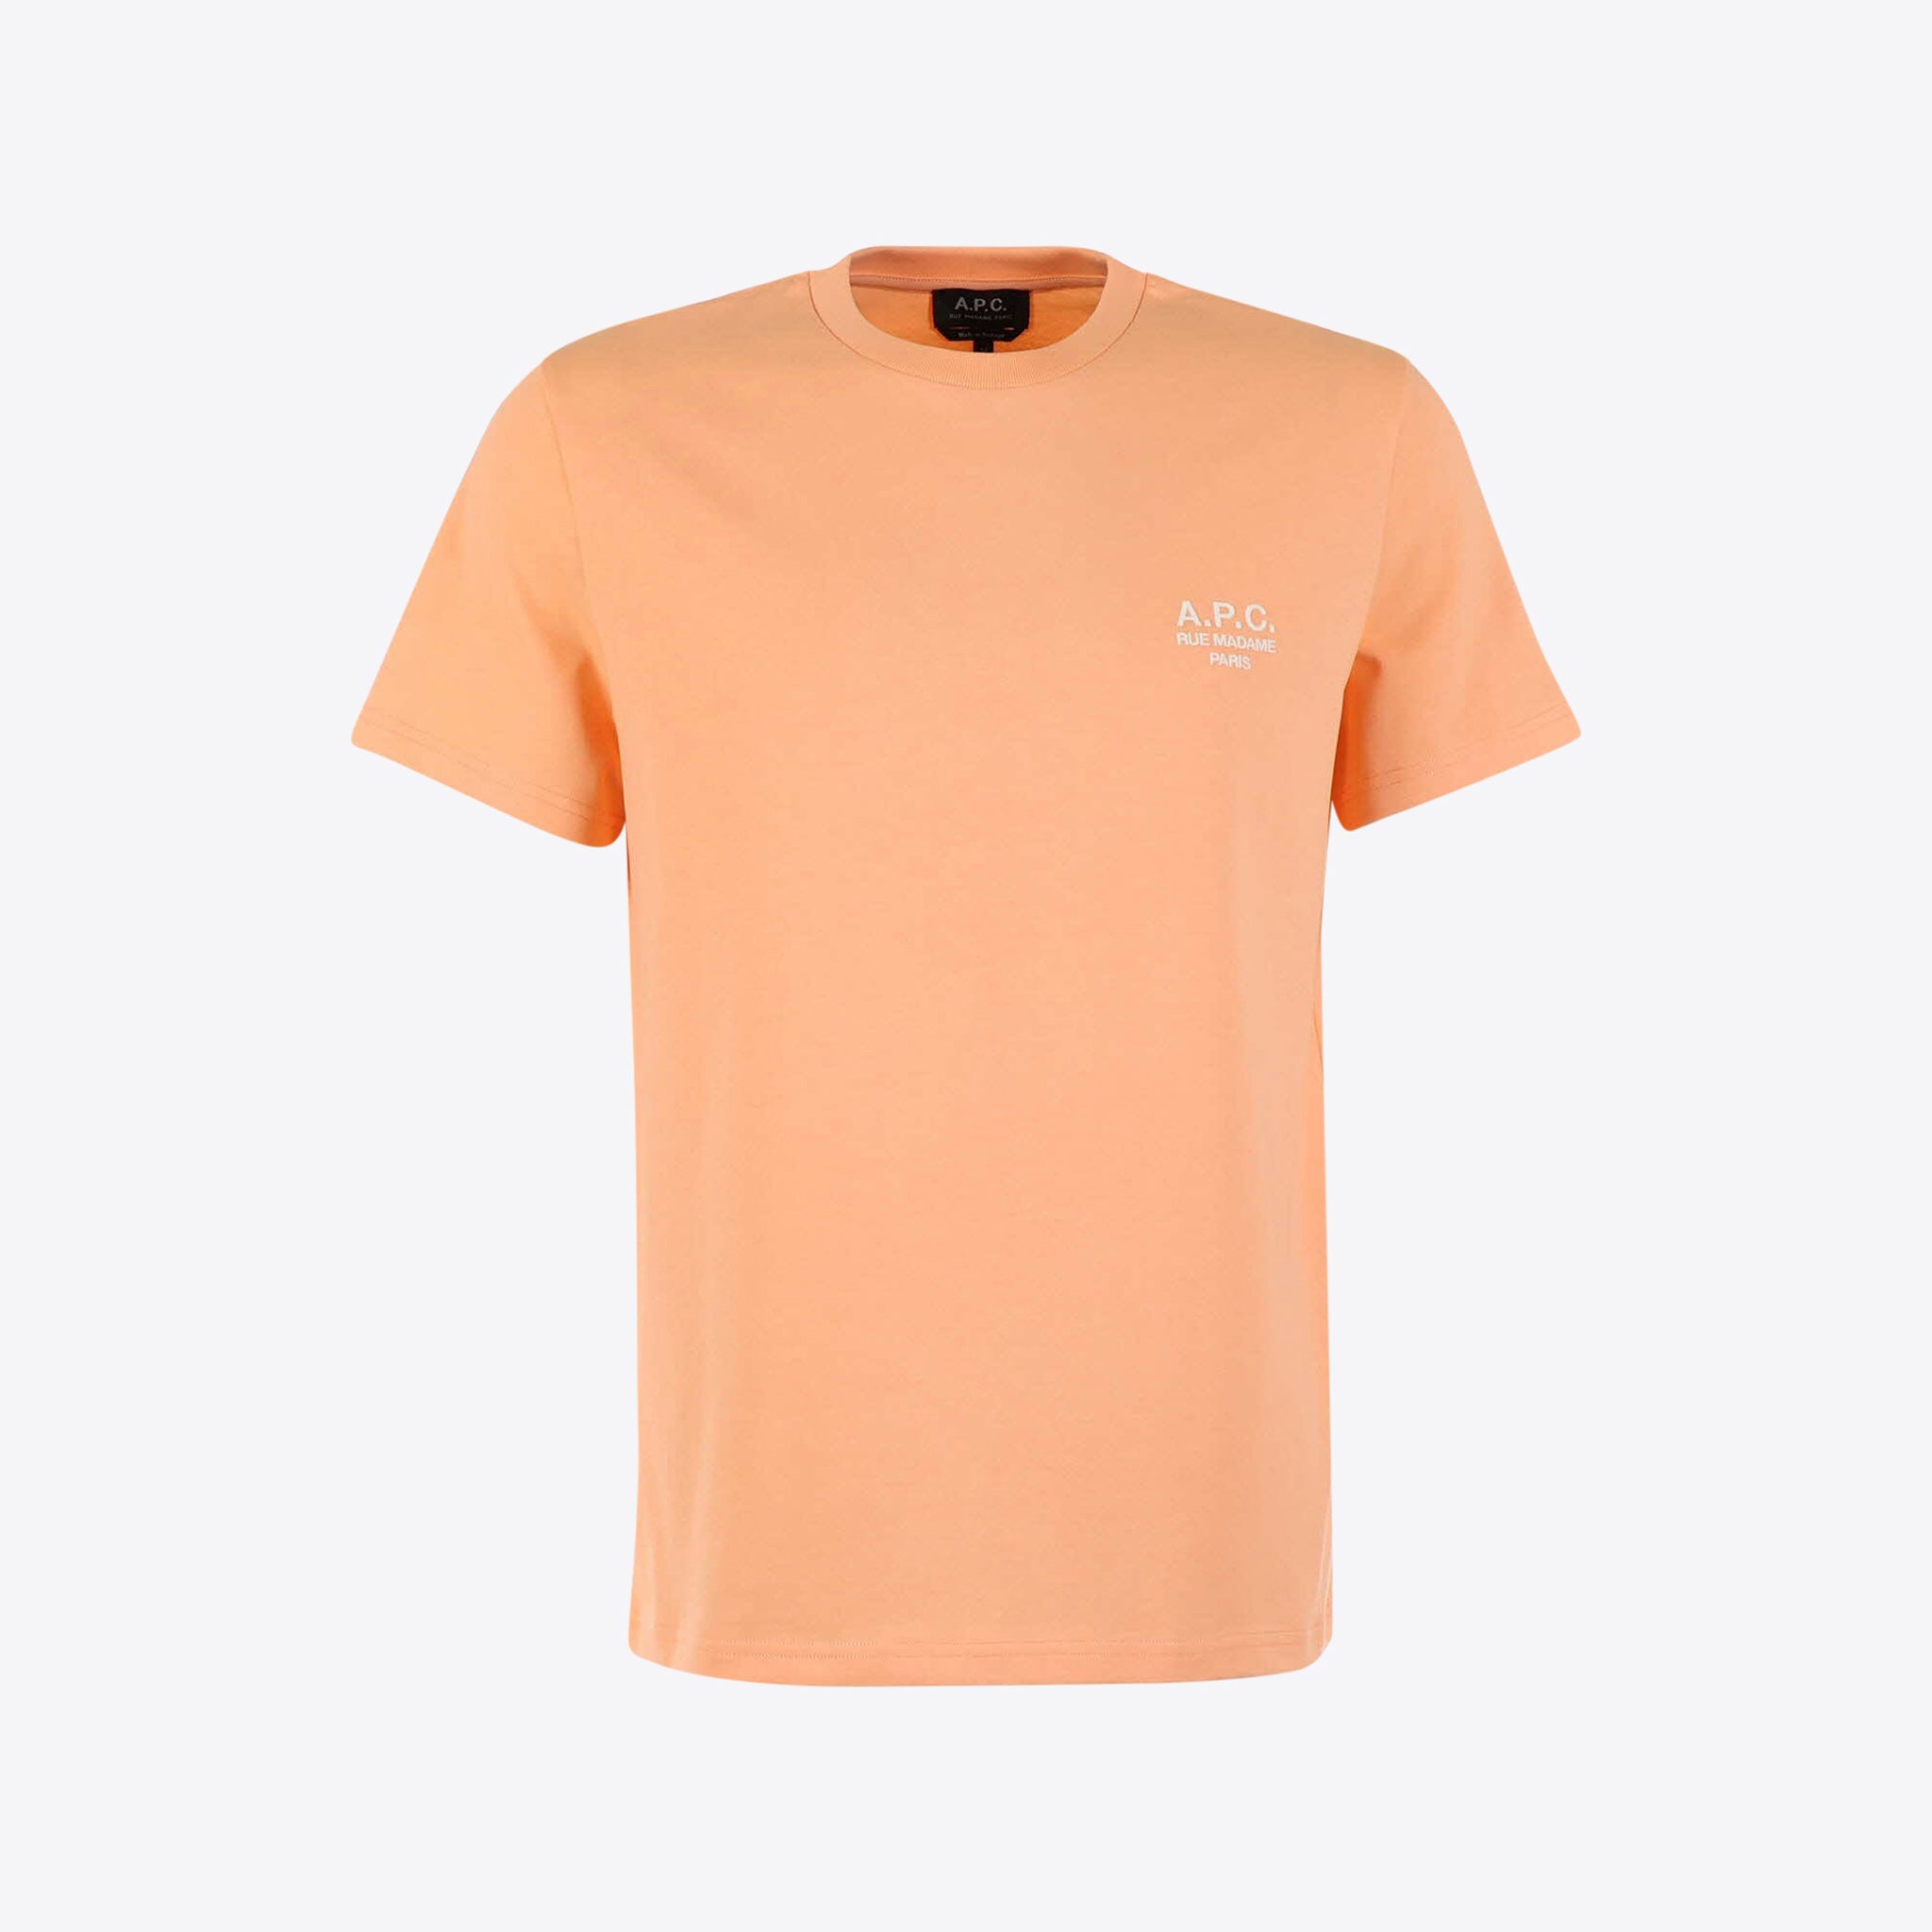 A.p.c. T-shirt Oranje Raymond